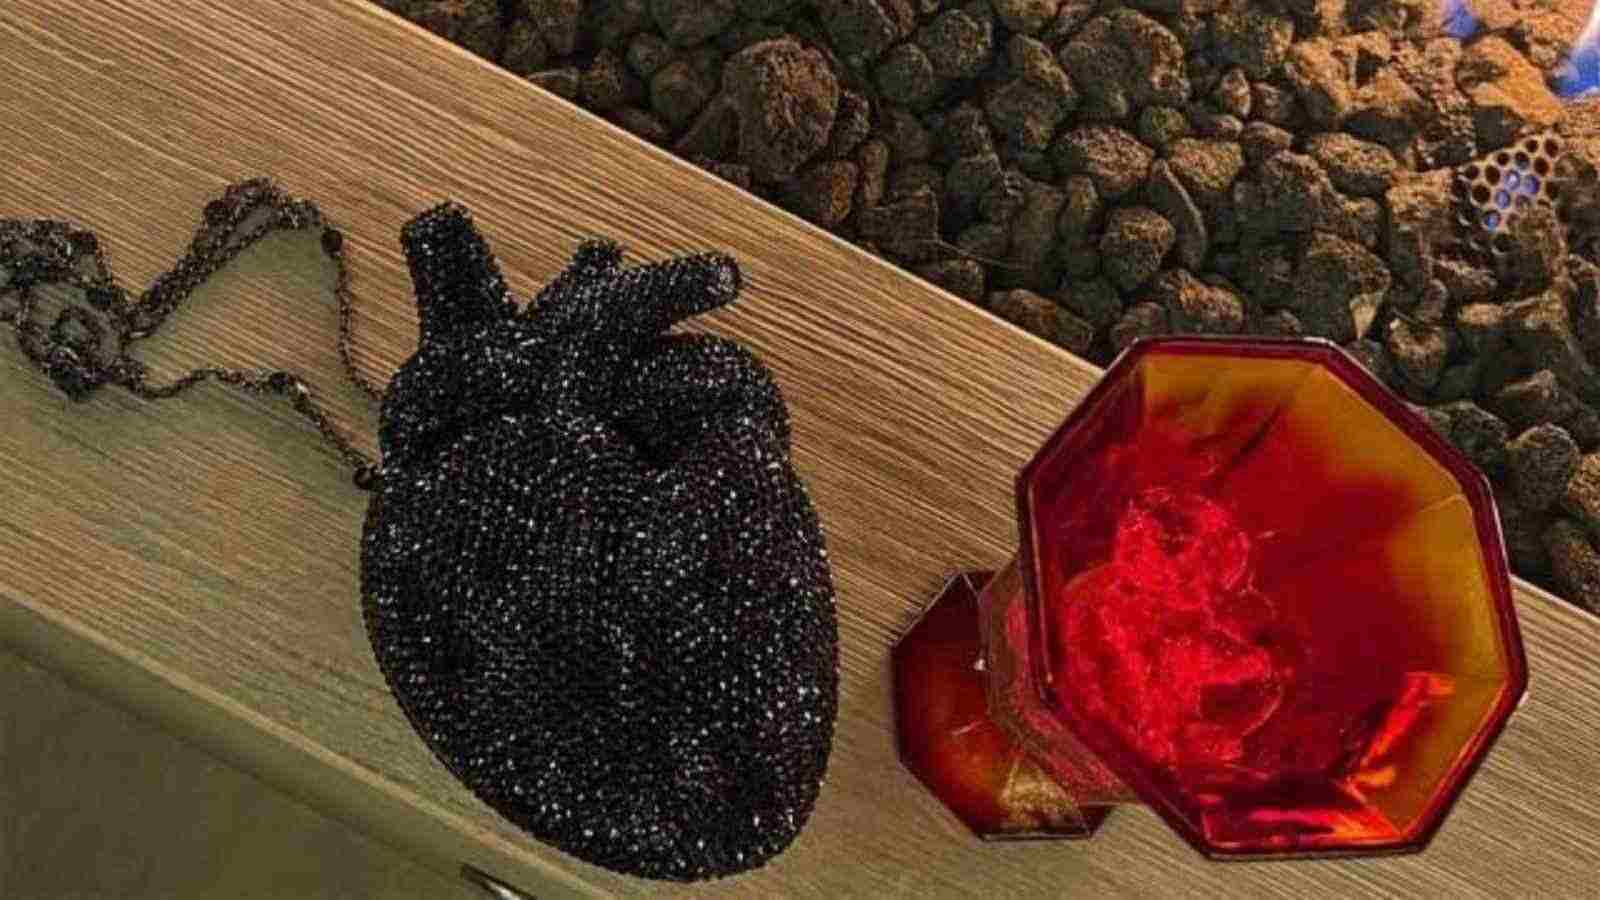 Heart shaped bag of Kourtney Kardashian and Travis Berker